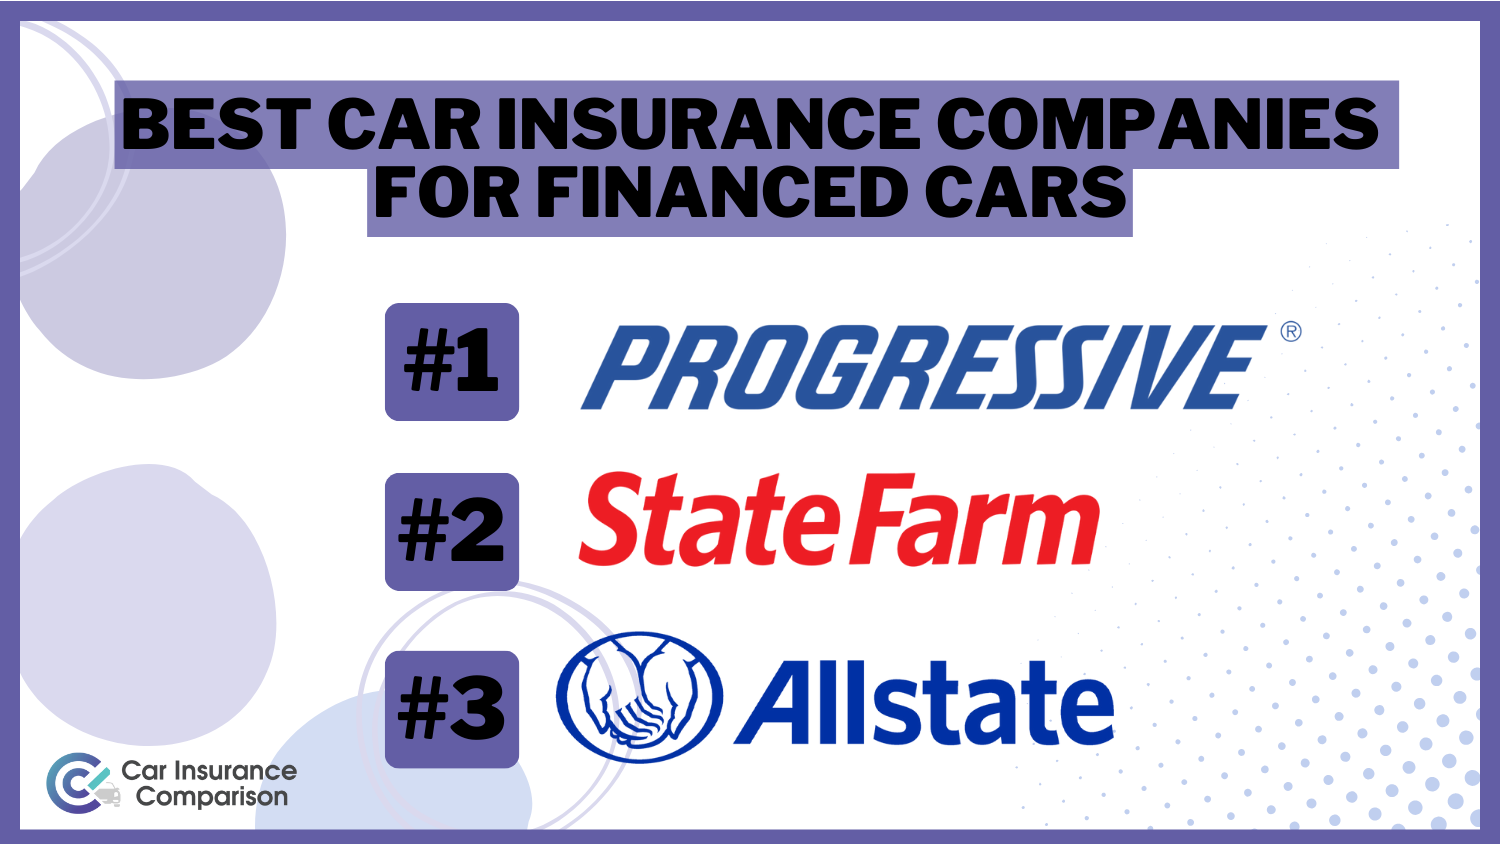 Progressive, State Farm, Allstate: Best Car Insurance Companies for Financed Cars